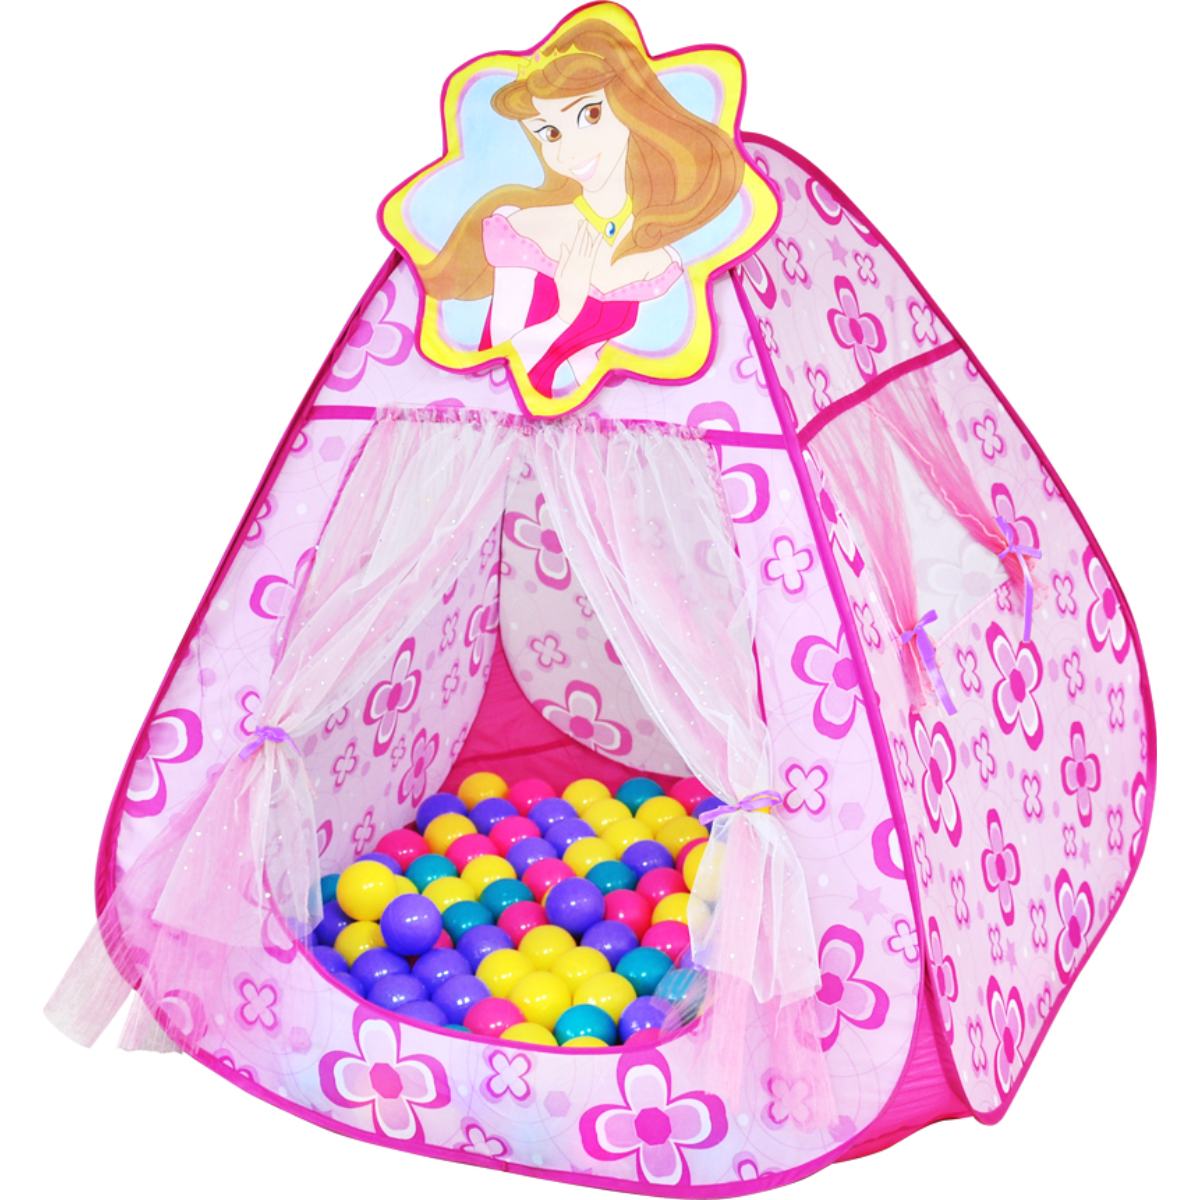 ching-ching-princess-house-with-100pcs-colorful-balls